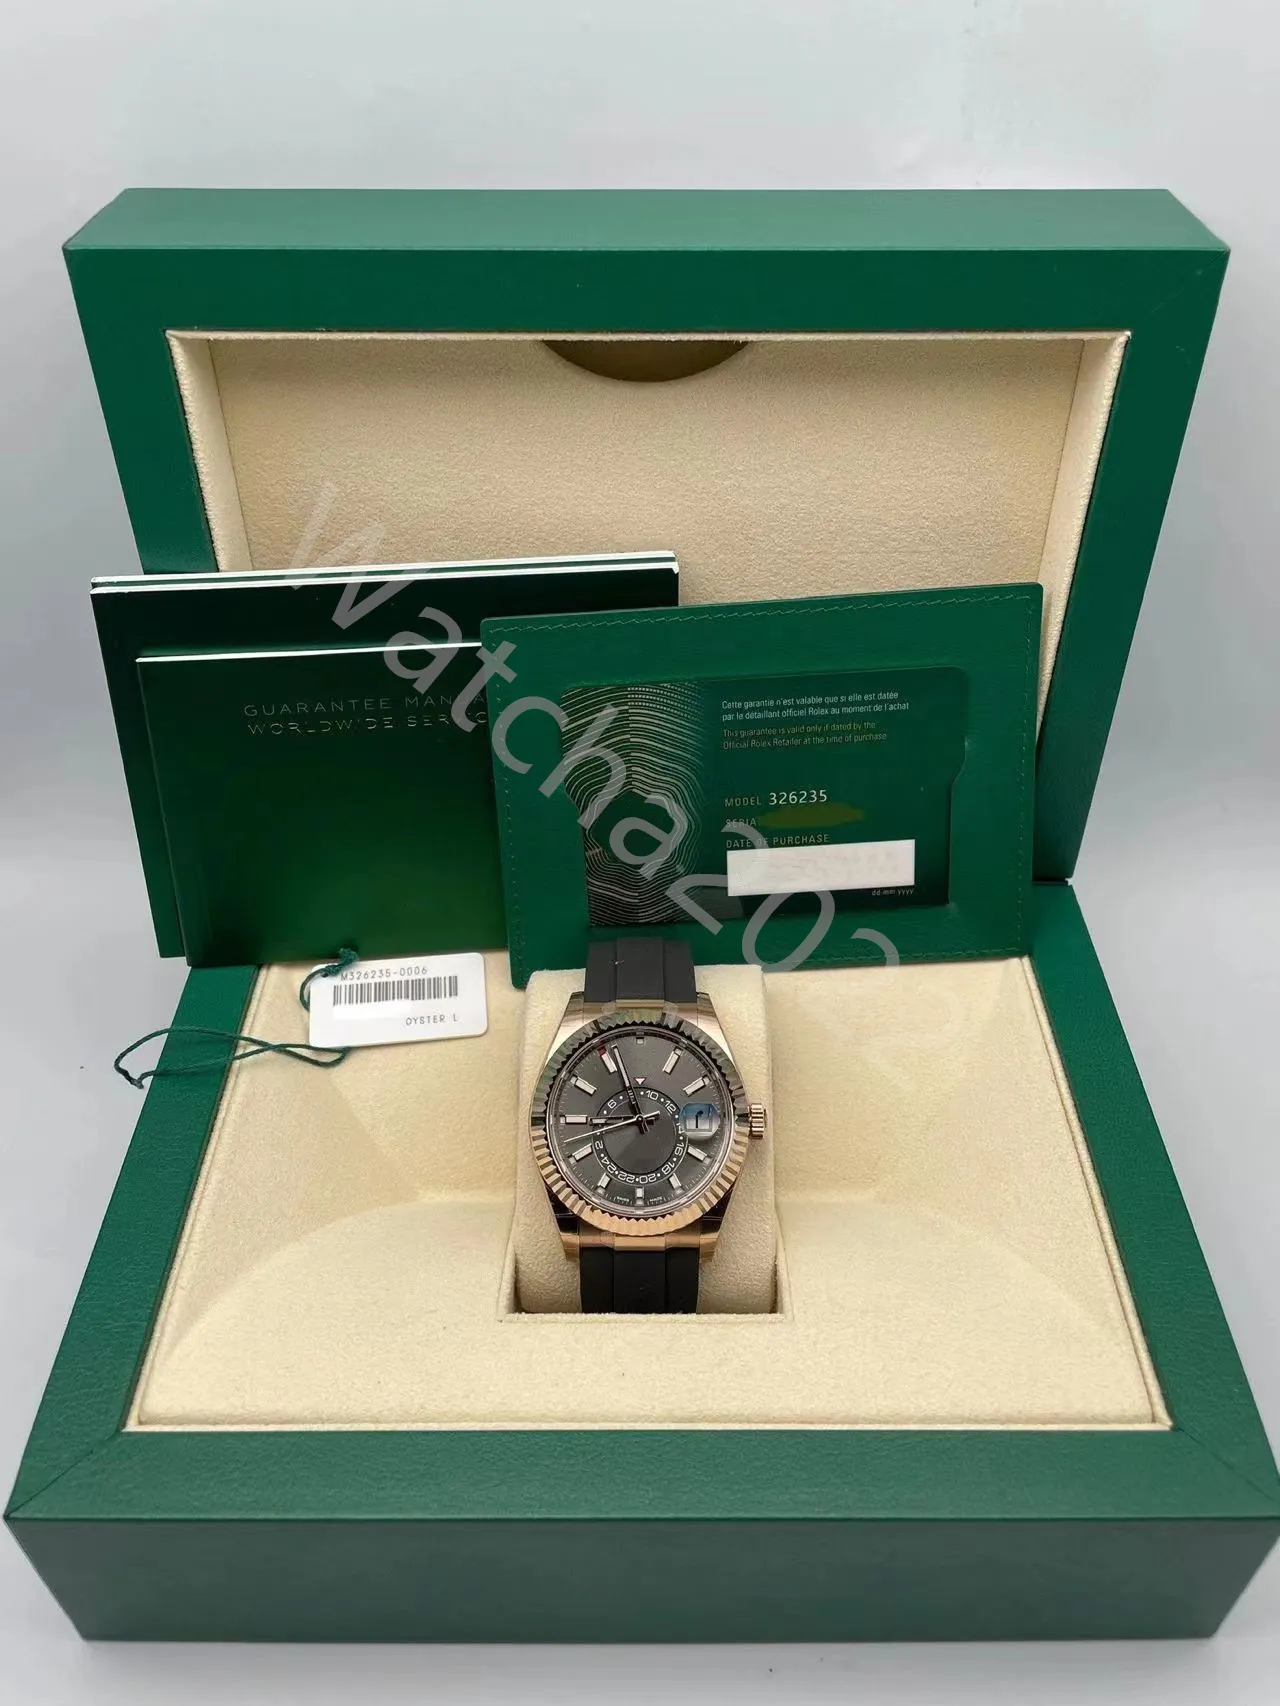 ZP Factory Luxury Watch Rose Gold Men's Automatic Mechanical Cal 2823 Japan Watch M326235-0006 42mm 904L en acier inoxydable Lumi352Z